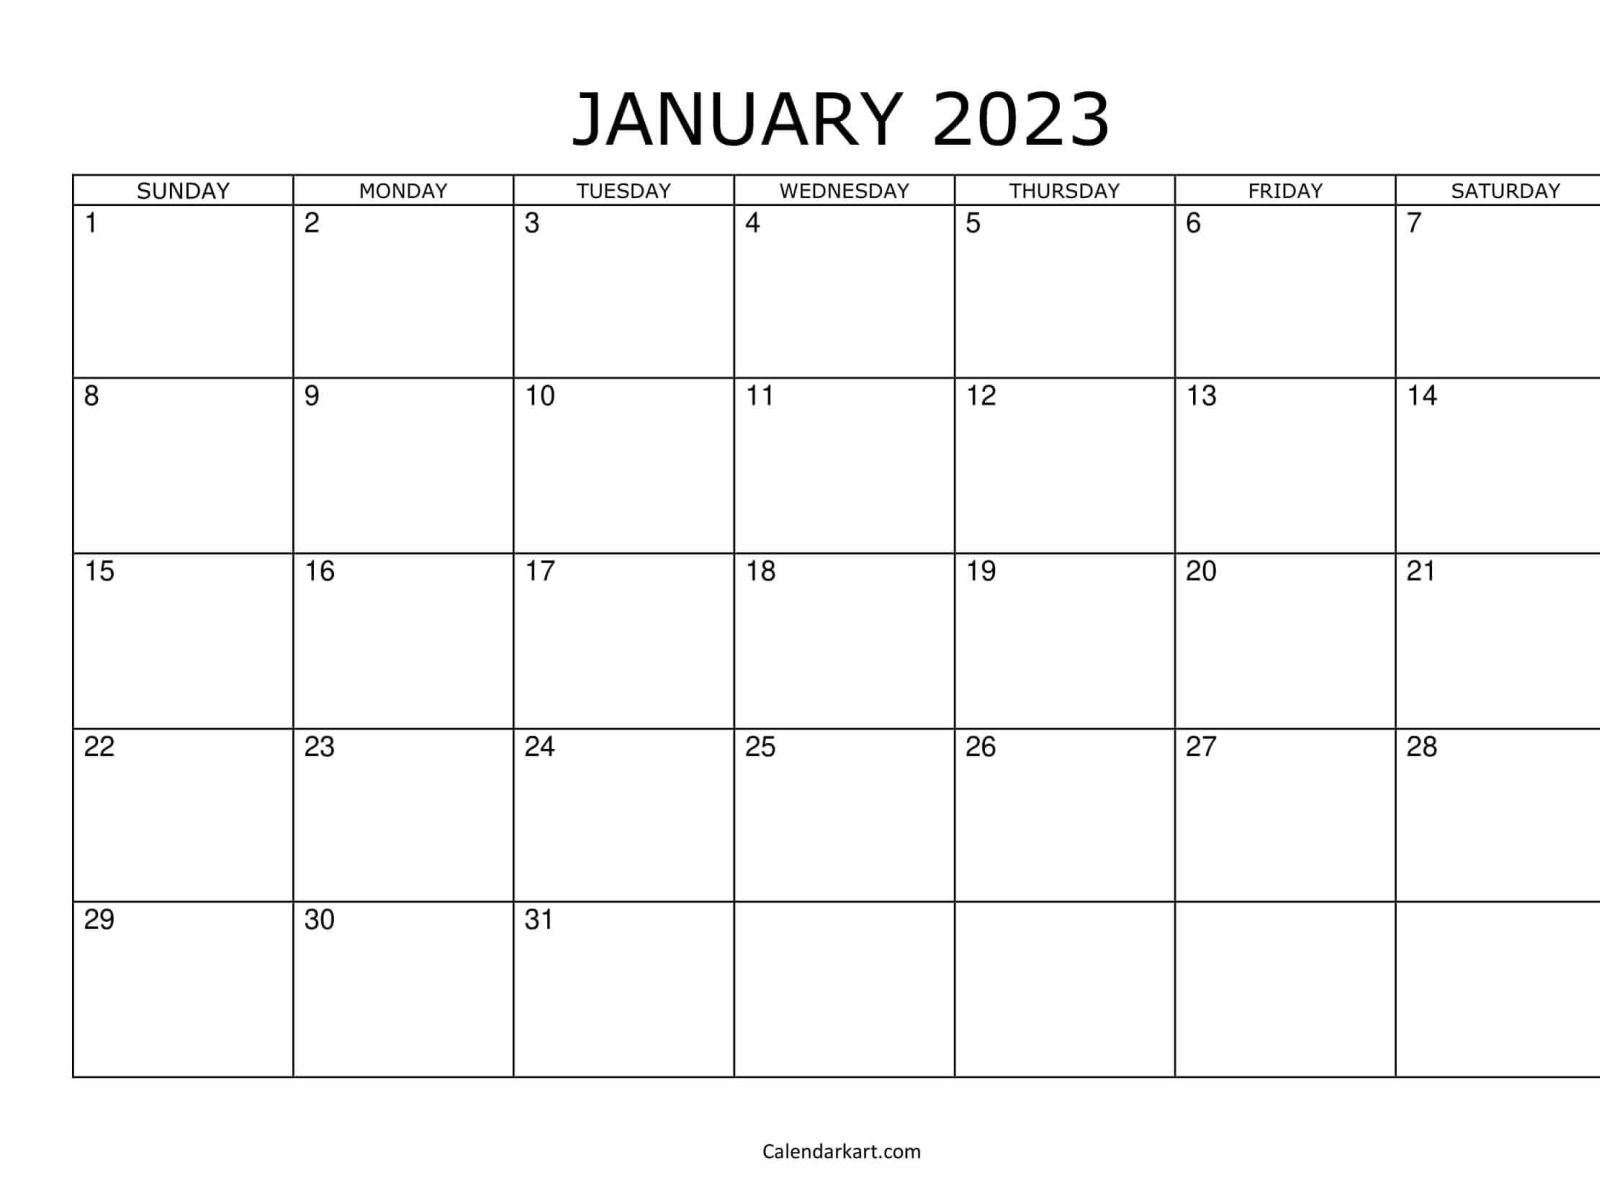 January 2023 Calendar Printable by Calendar Kart on Dribbble